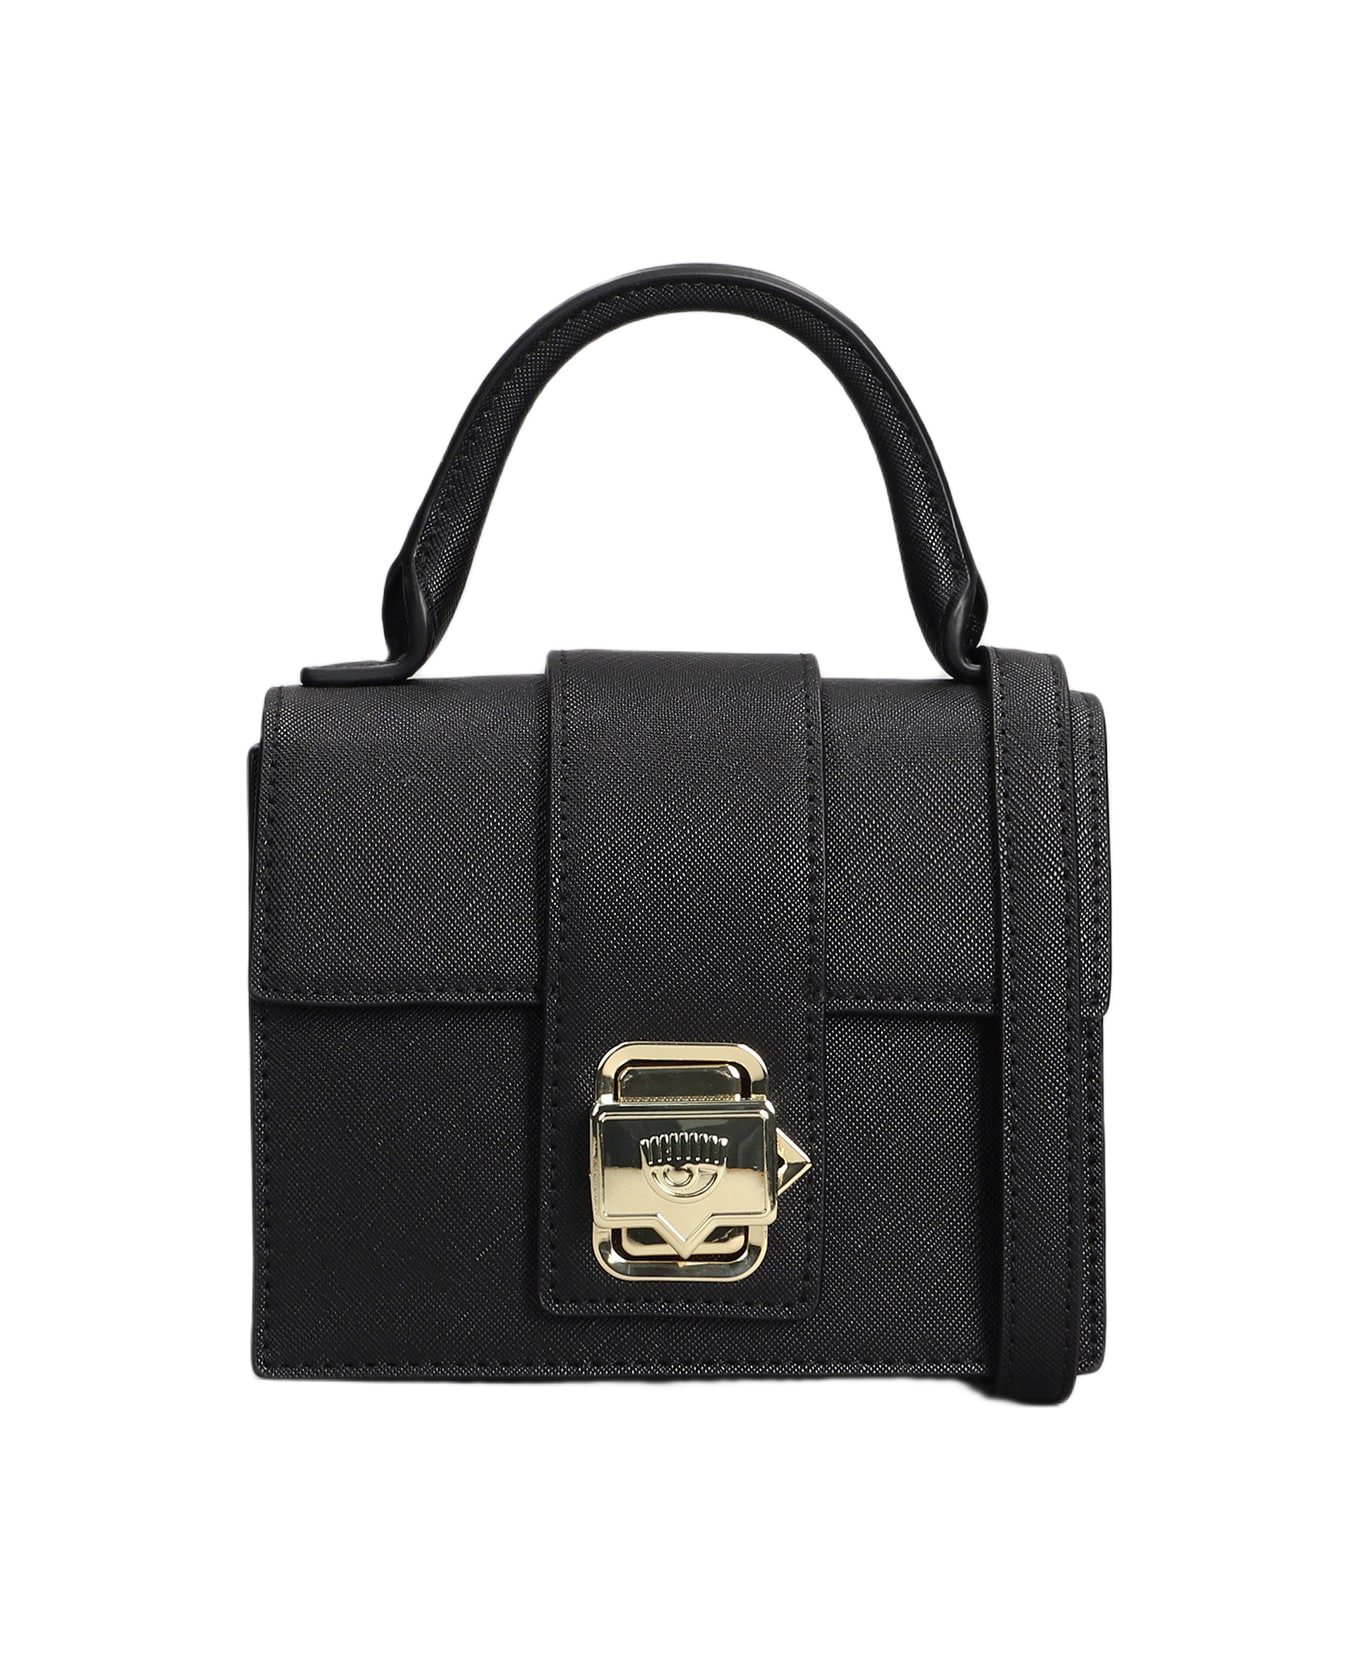 Chiara Ferragni Shoulder Bag In Black Faux Leather - black